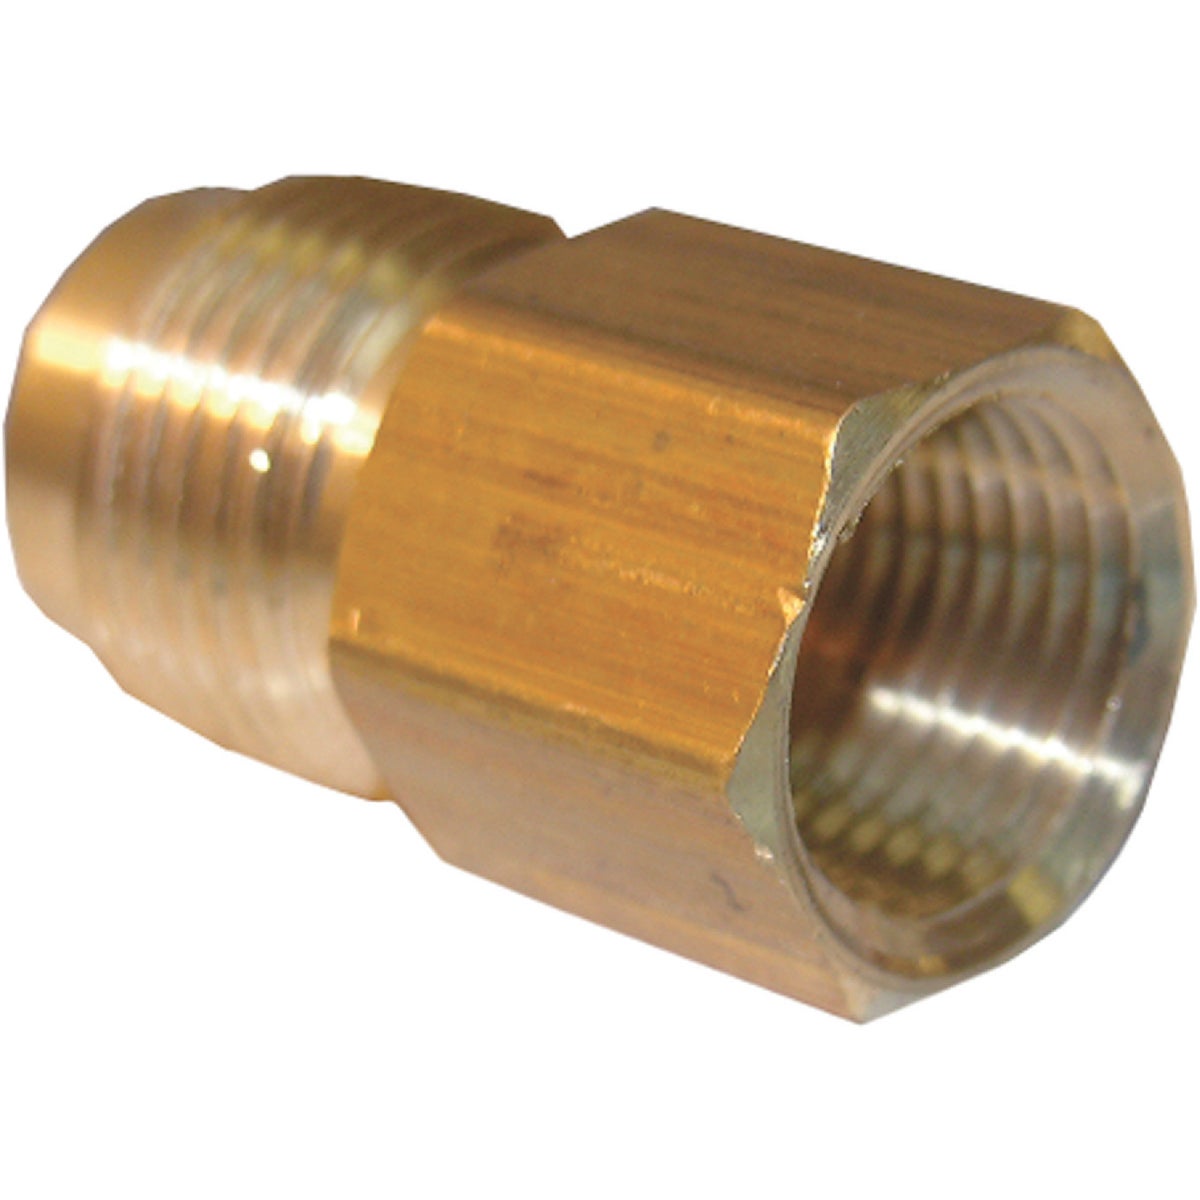 Lasco 1/2 In. M x 3/4 In. FPT Brass Flare Adapter